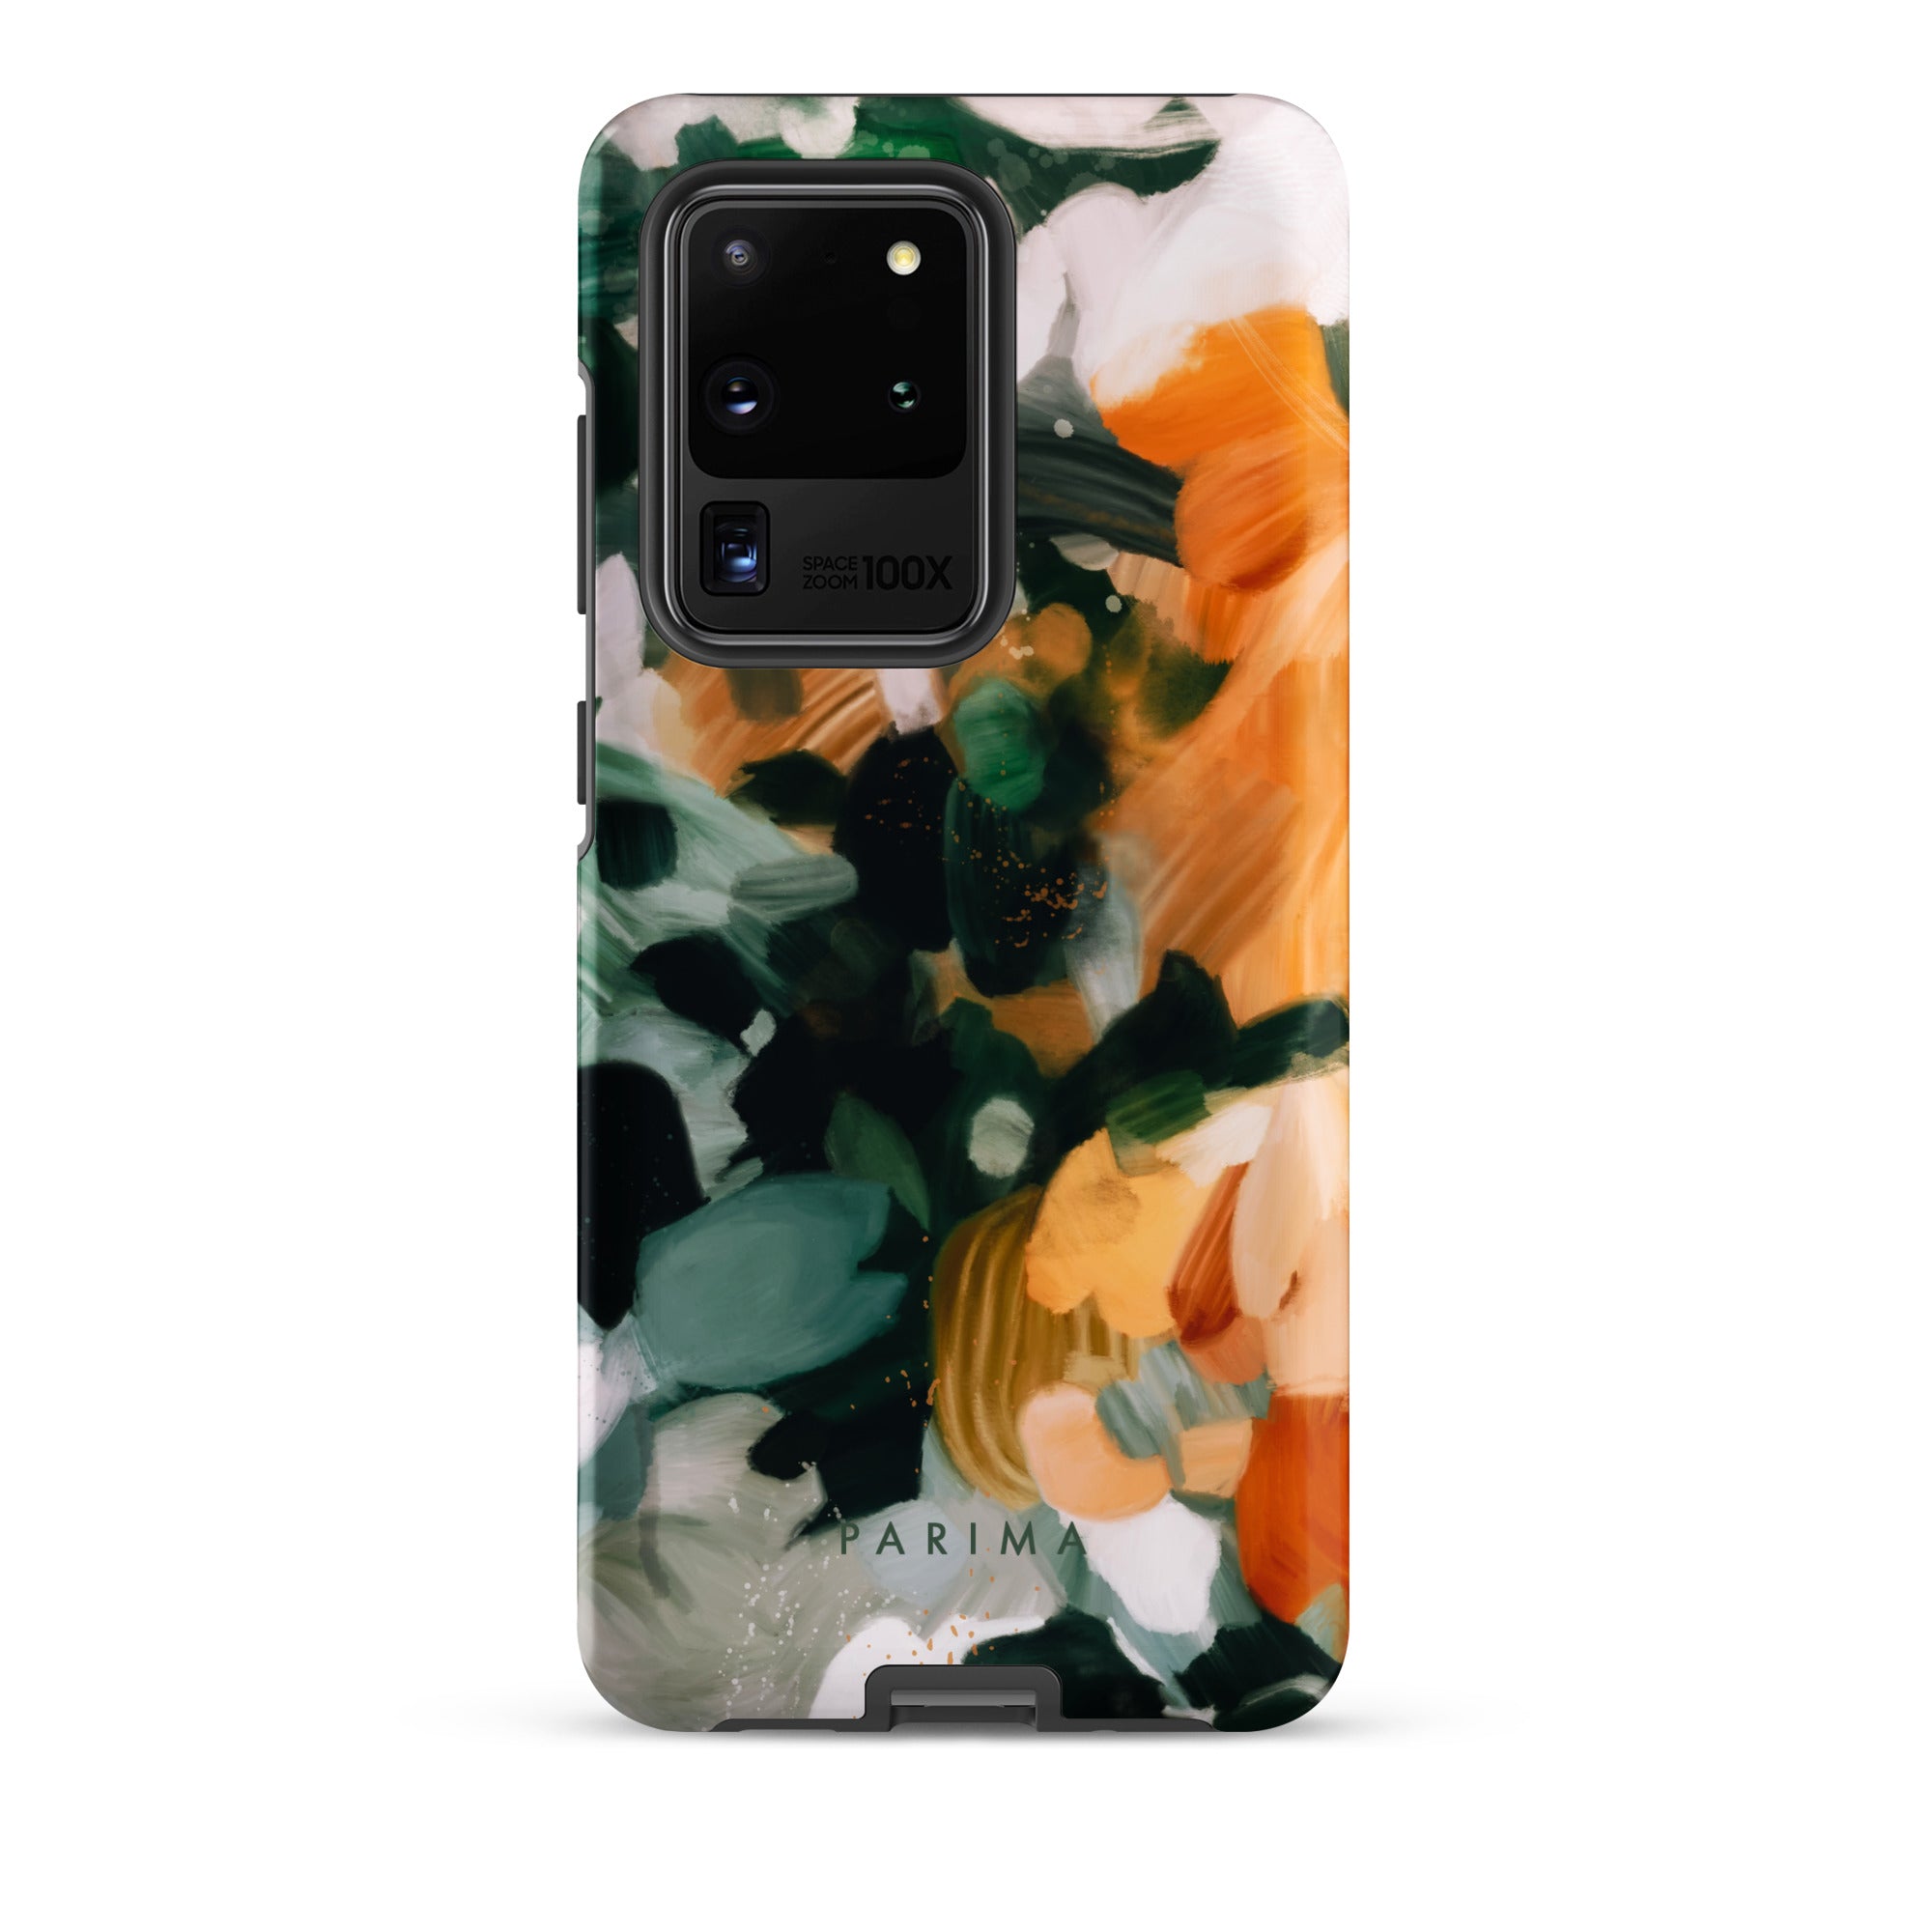 Aspen, green and orange abstract art on Samsung Galaxy S20 Ultra tough case by Parima Studio